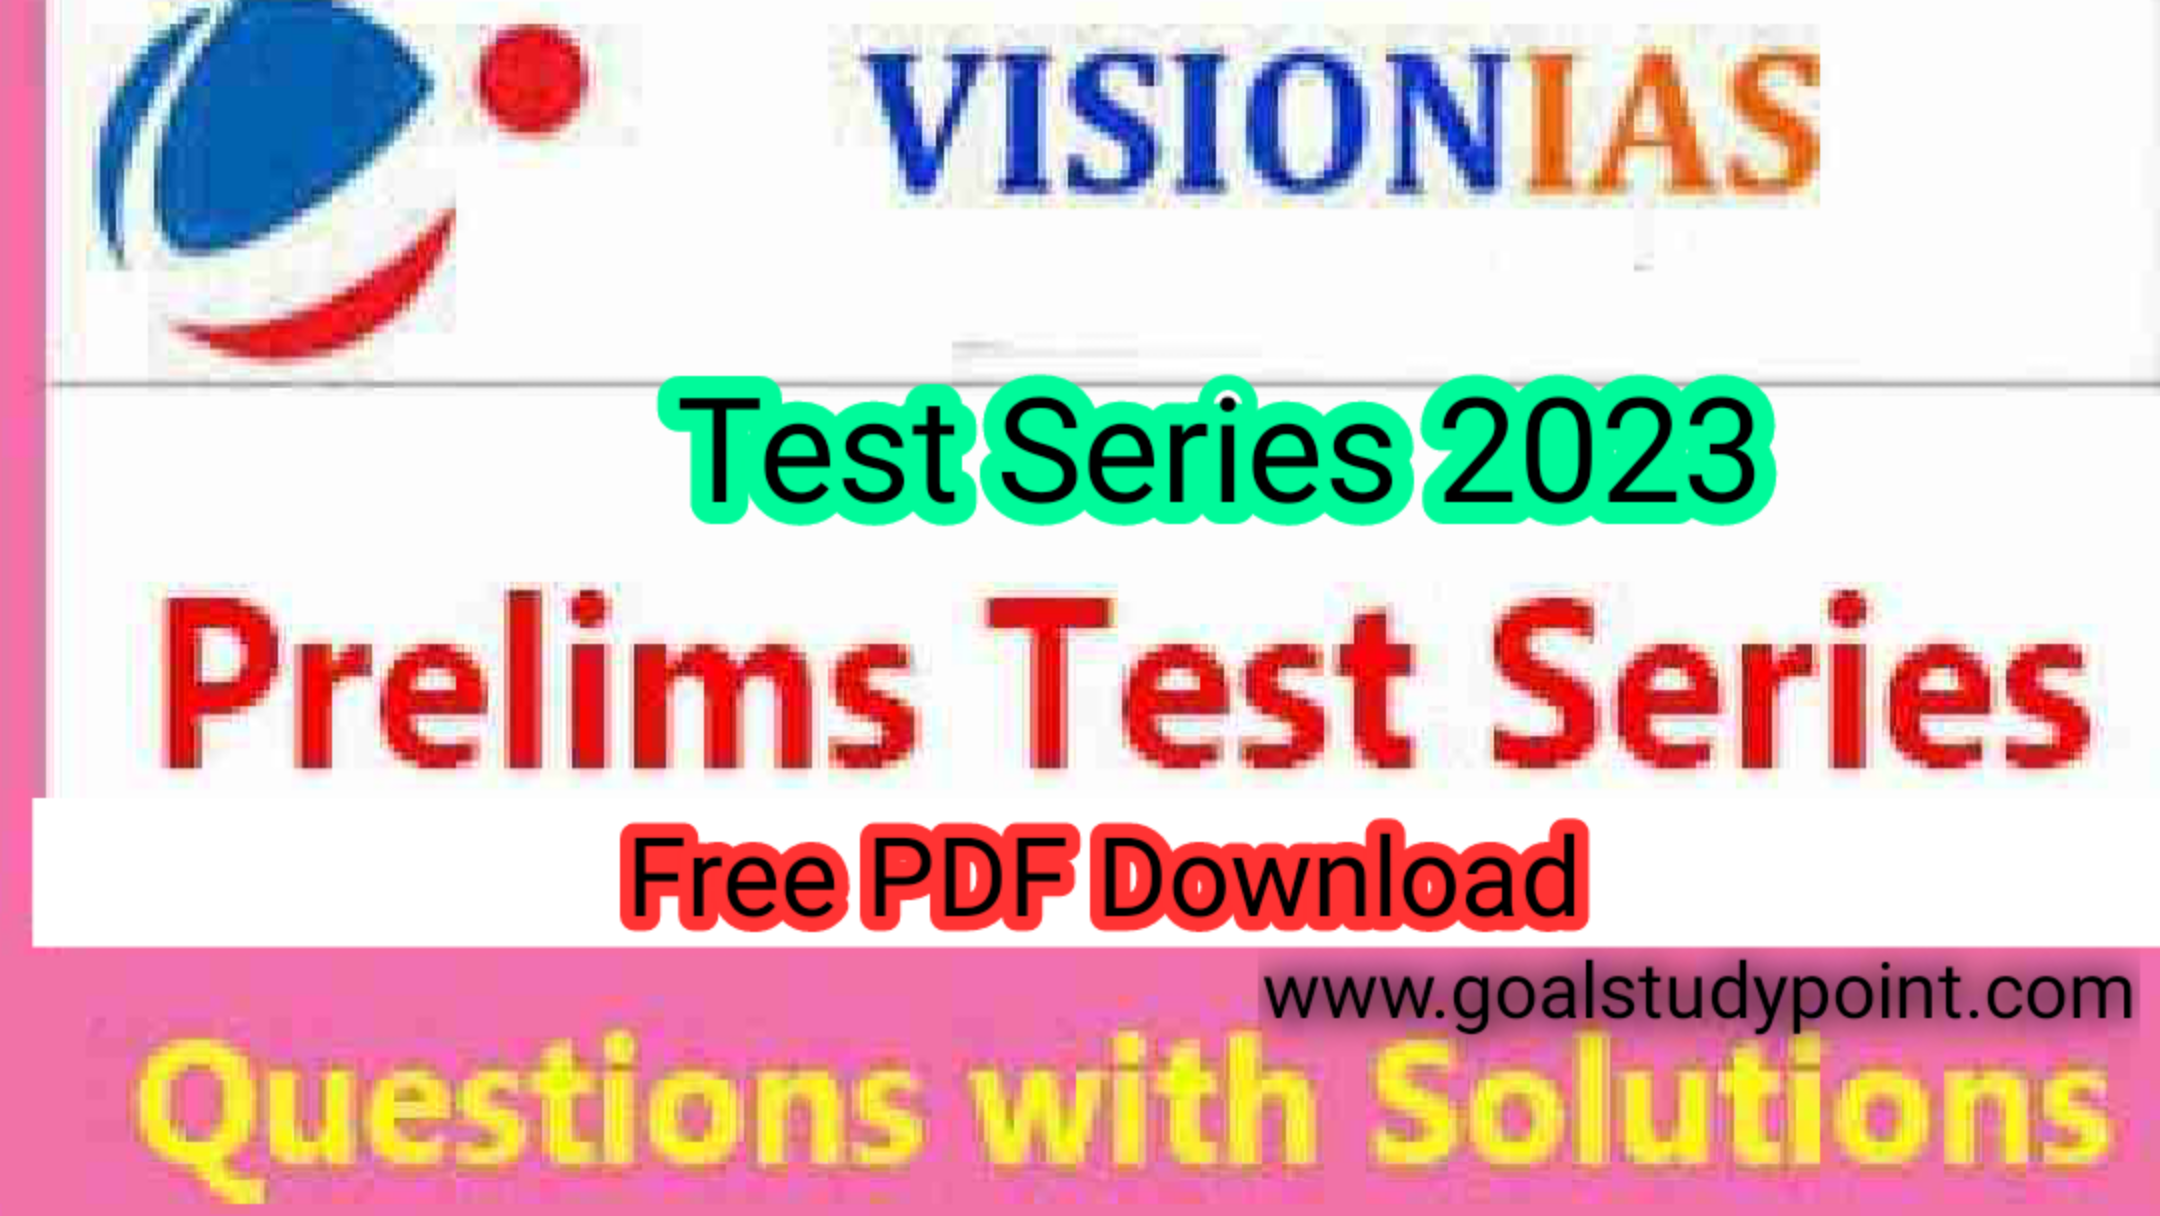 Vision IAS mains test series 2023